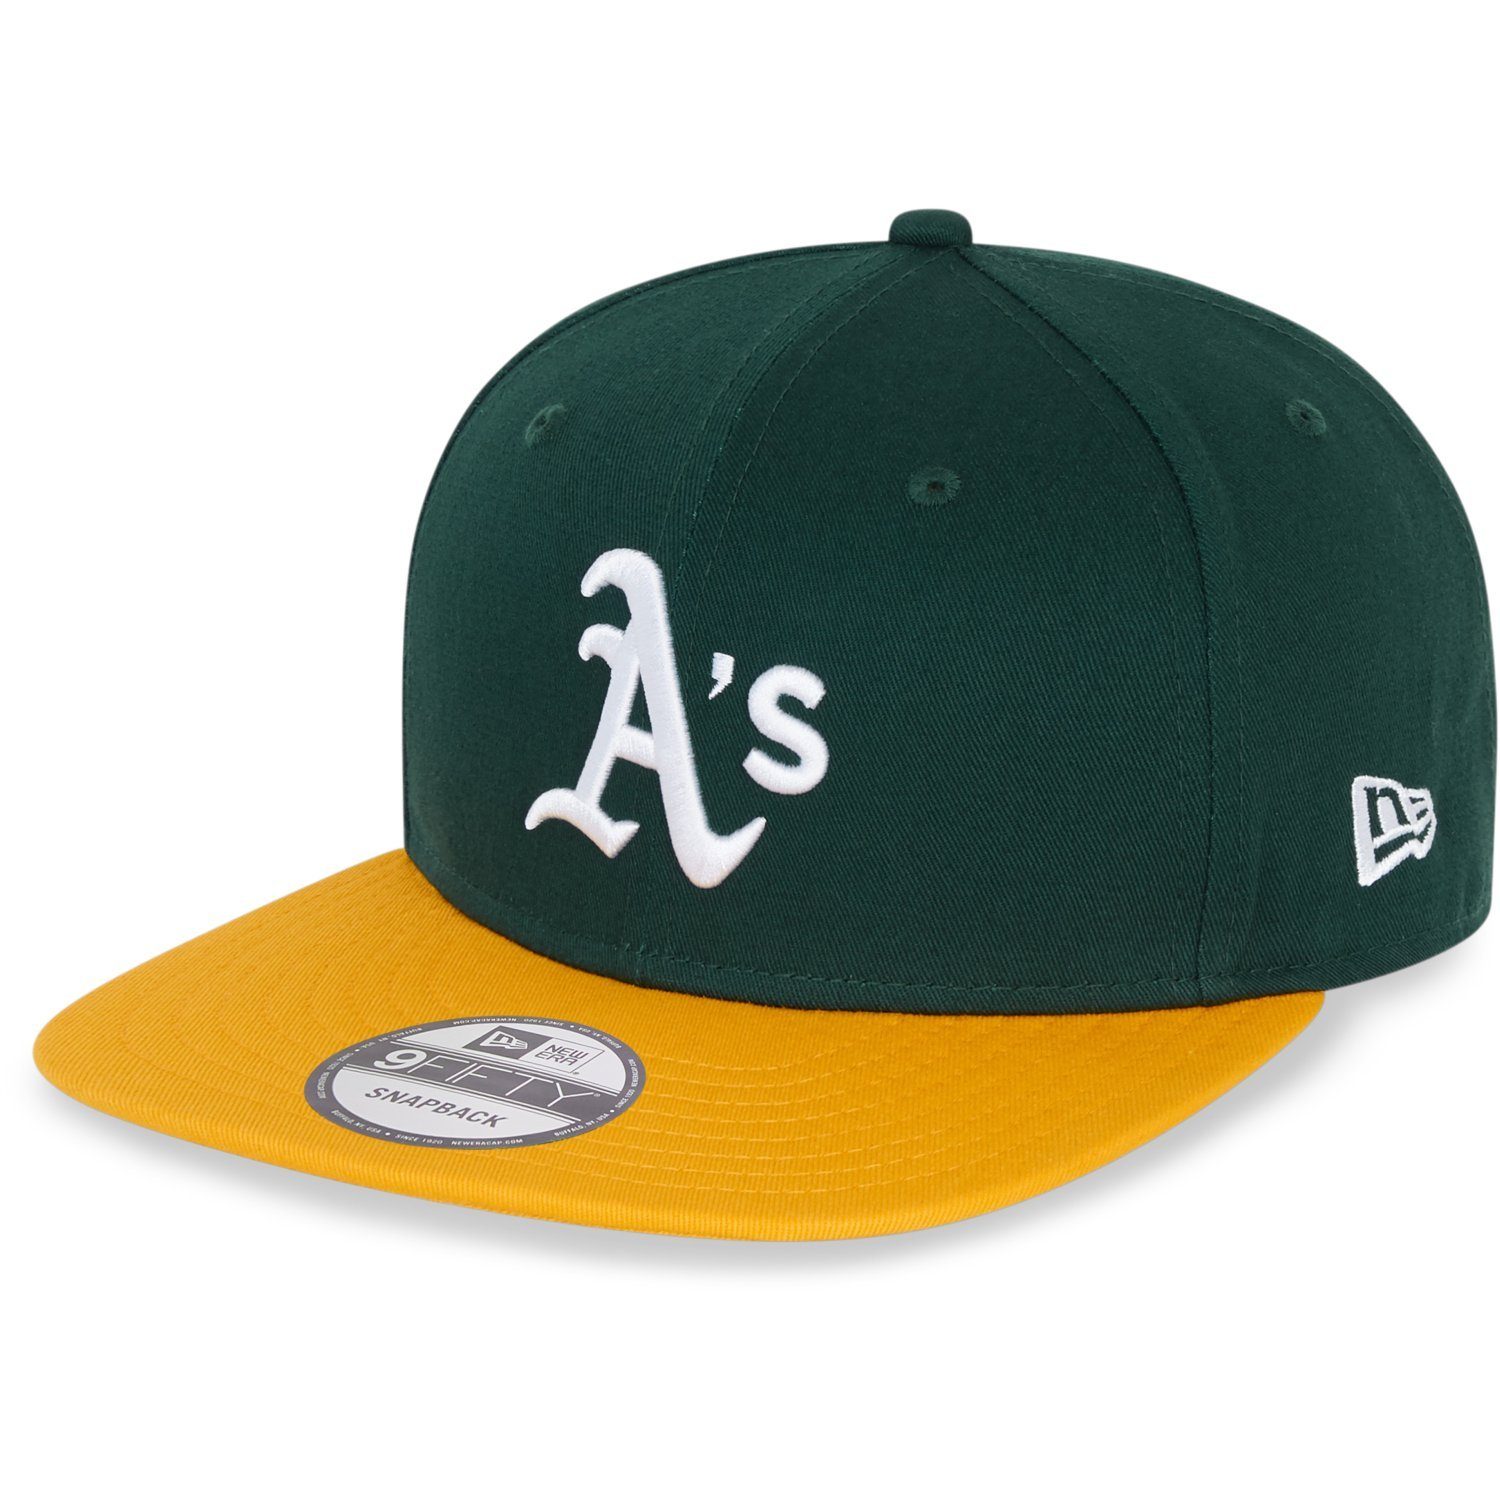 New Era Snapback Cap 9Fifty MLB Athletics Oakland